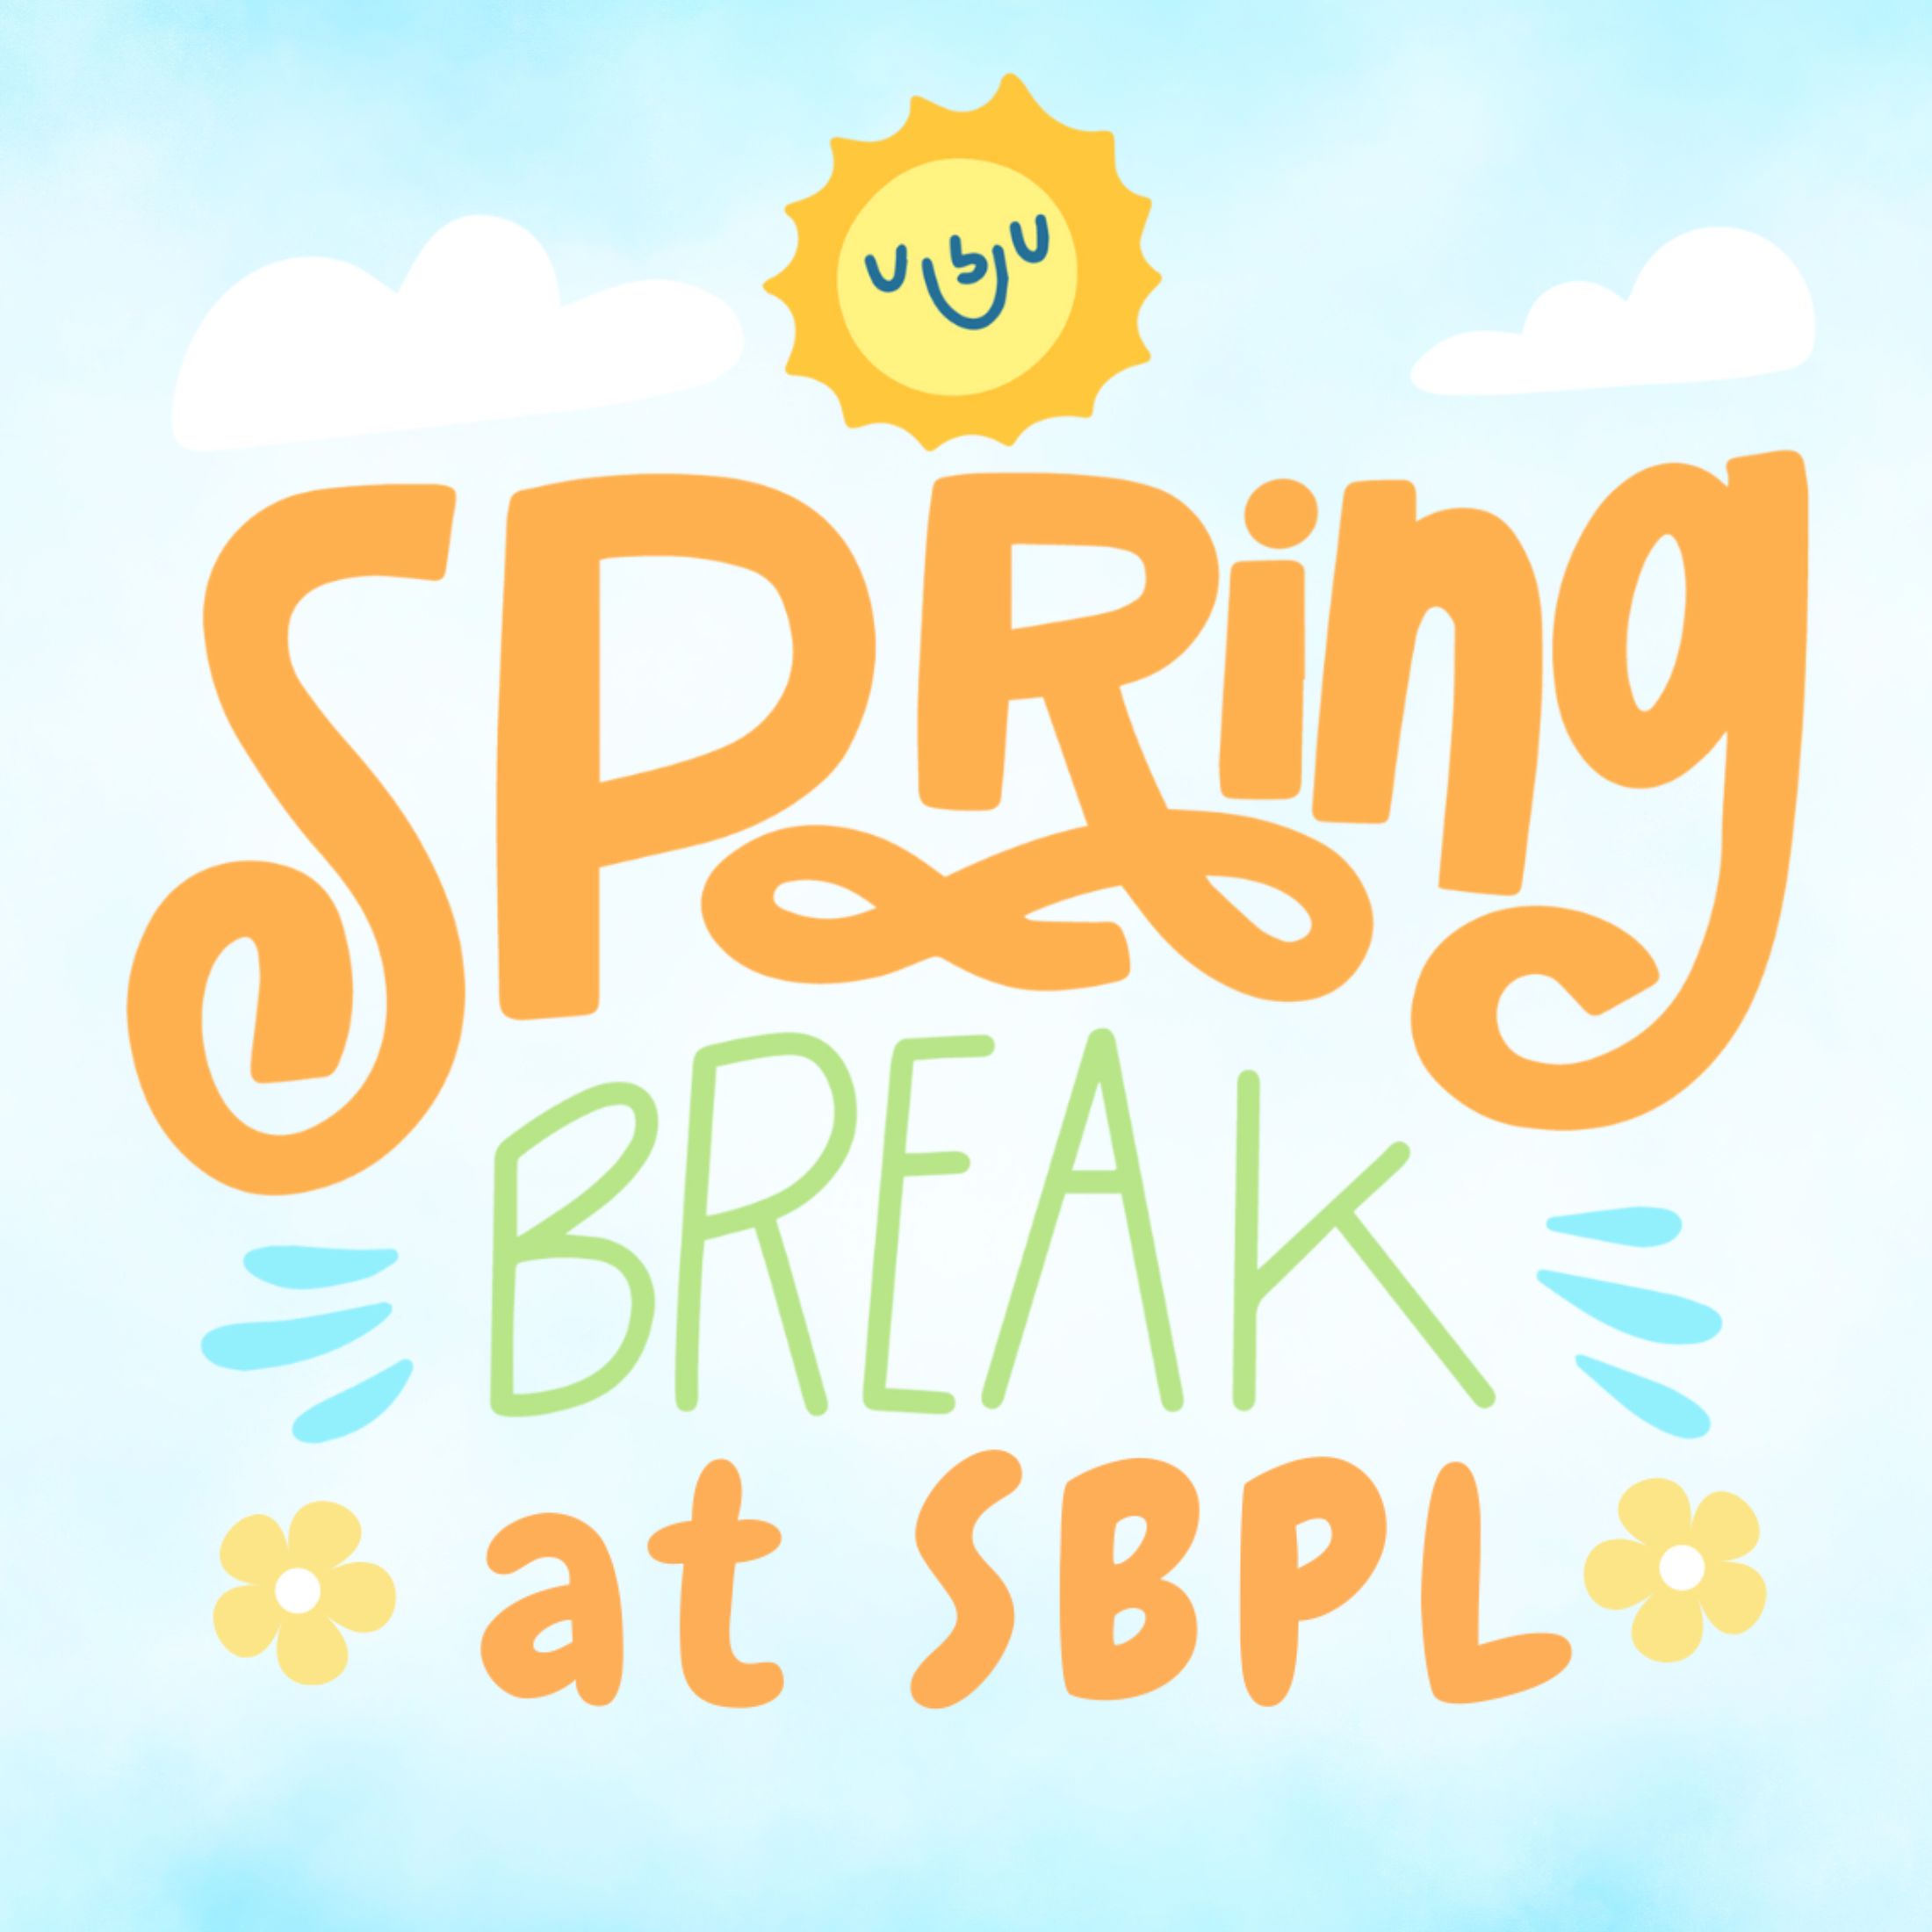 Spring Break at SBPL text with a cartoon sun